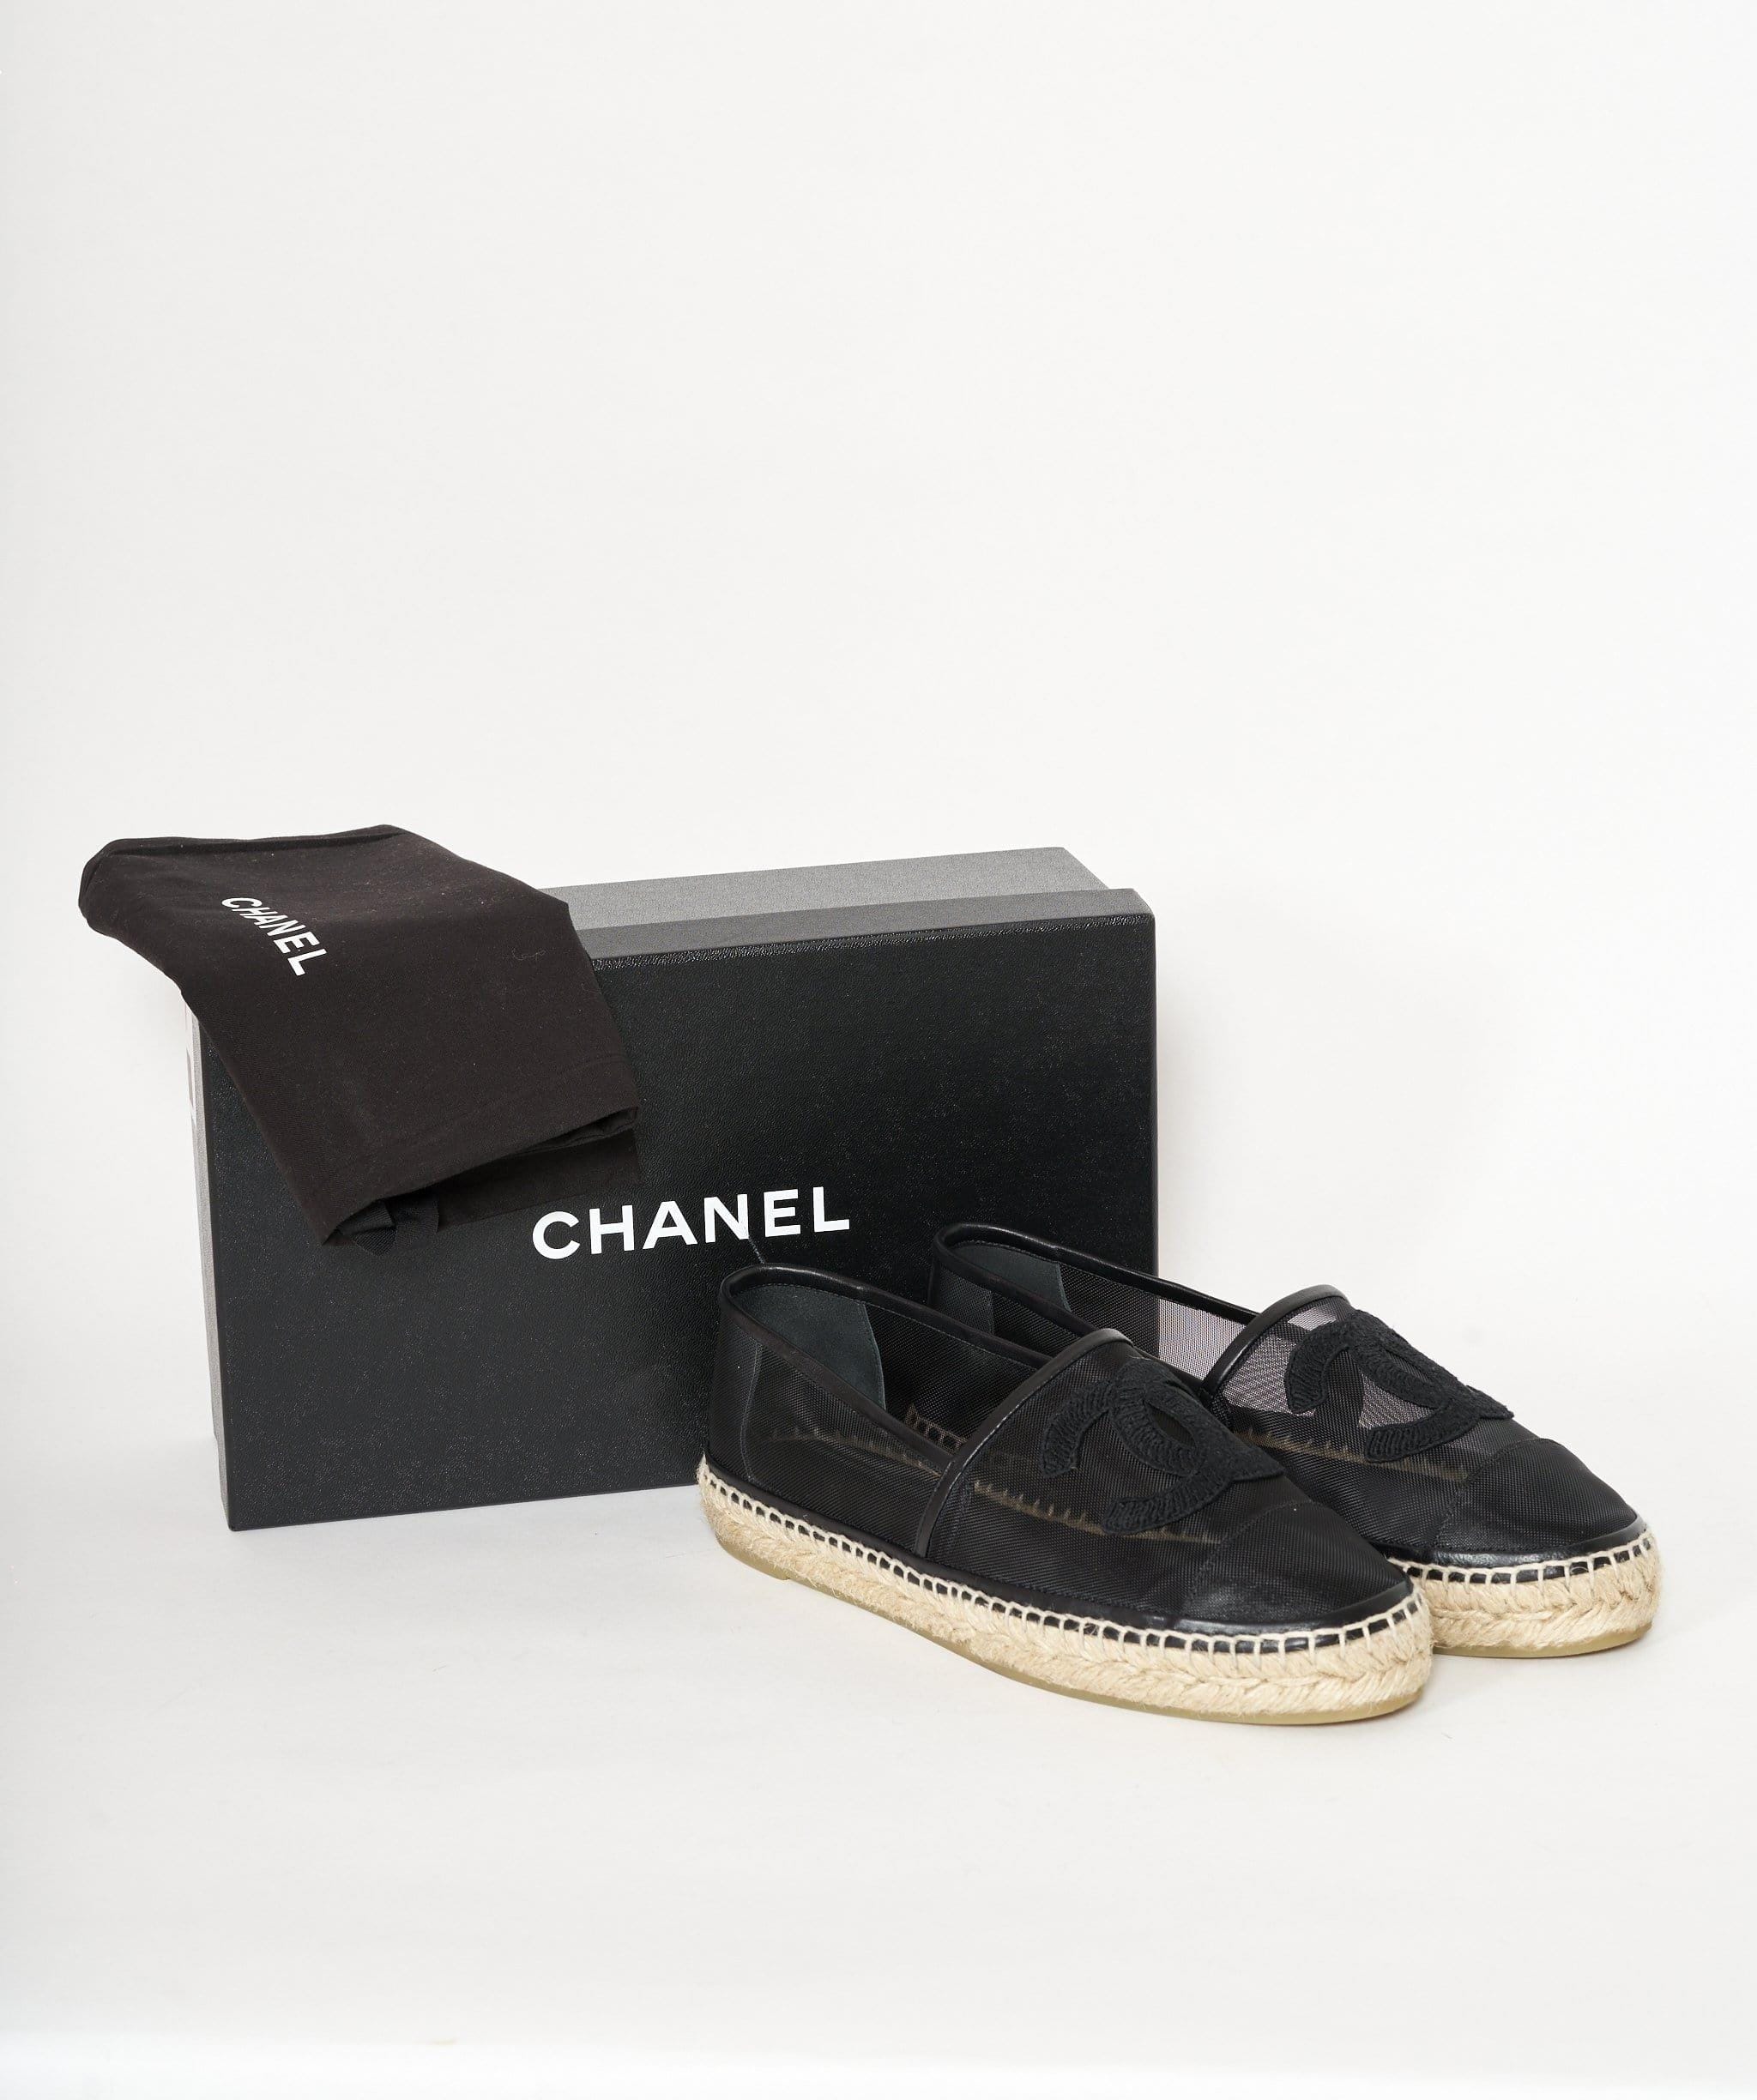 Chanel Chanel Black Espadrilles Size 40